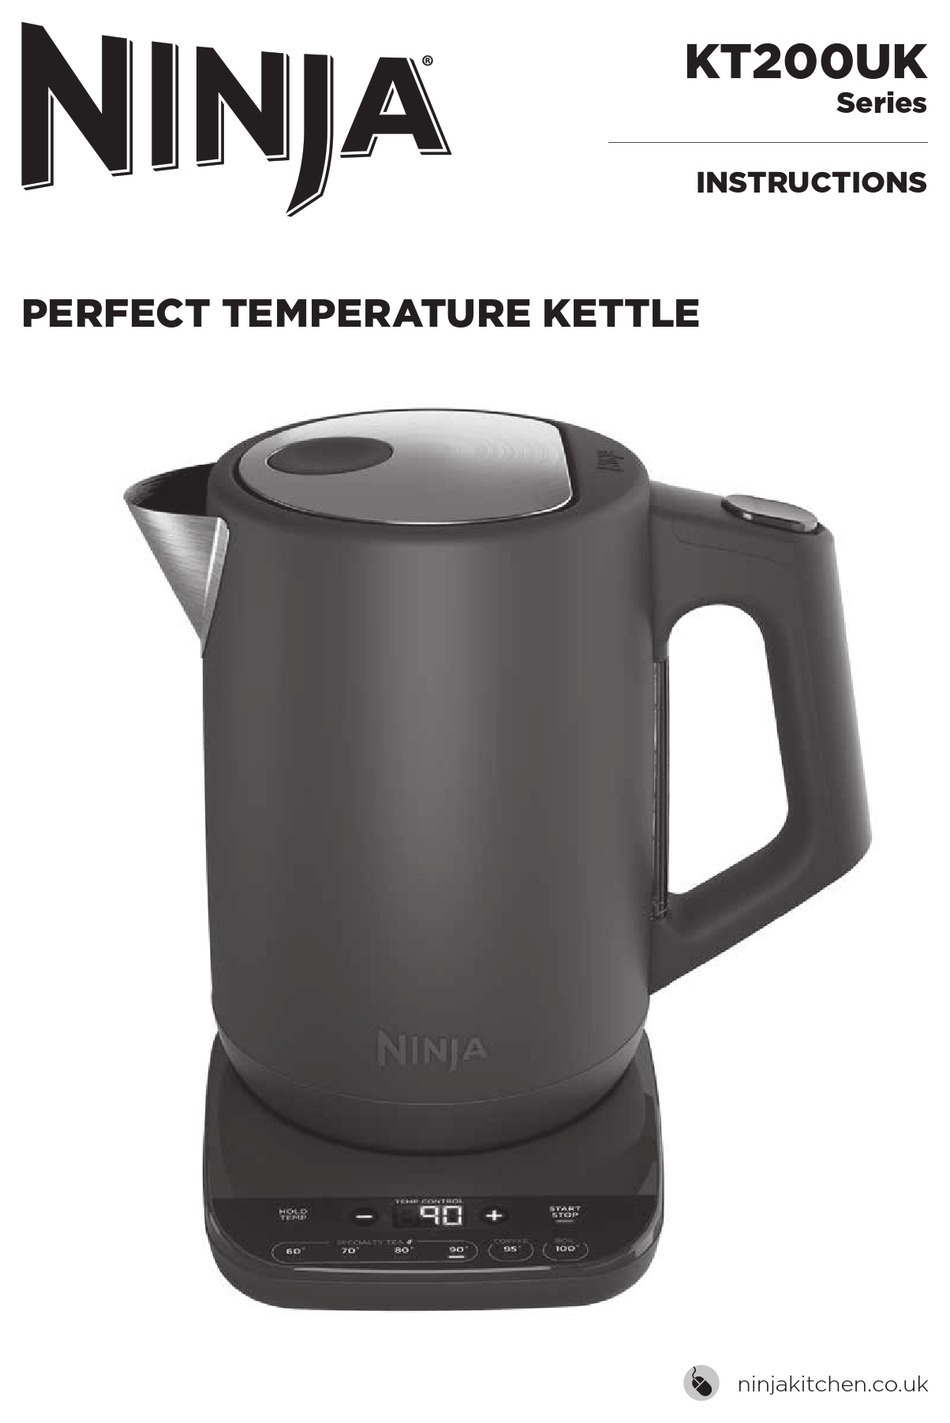 NINJA KT200 Precision Temperature Electric Kettle User Guide